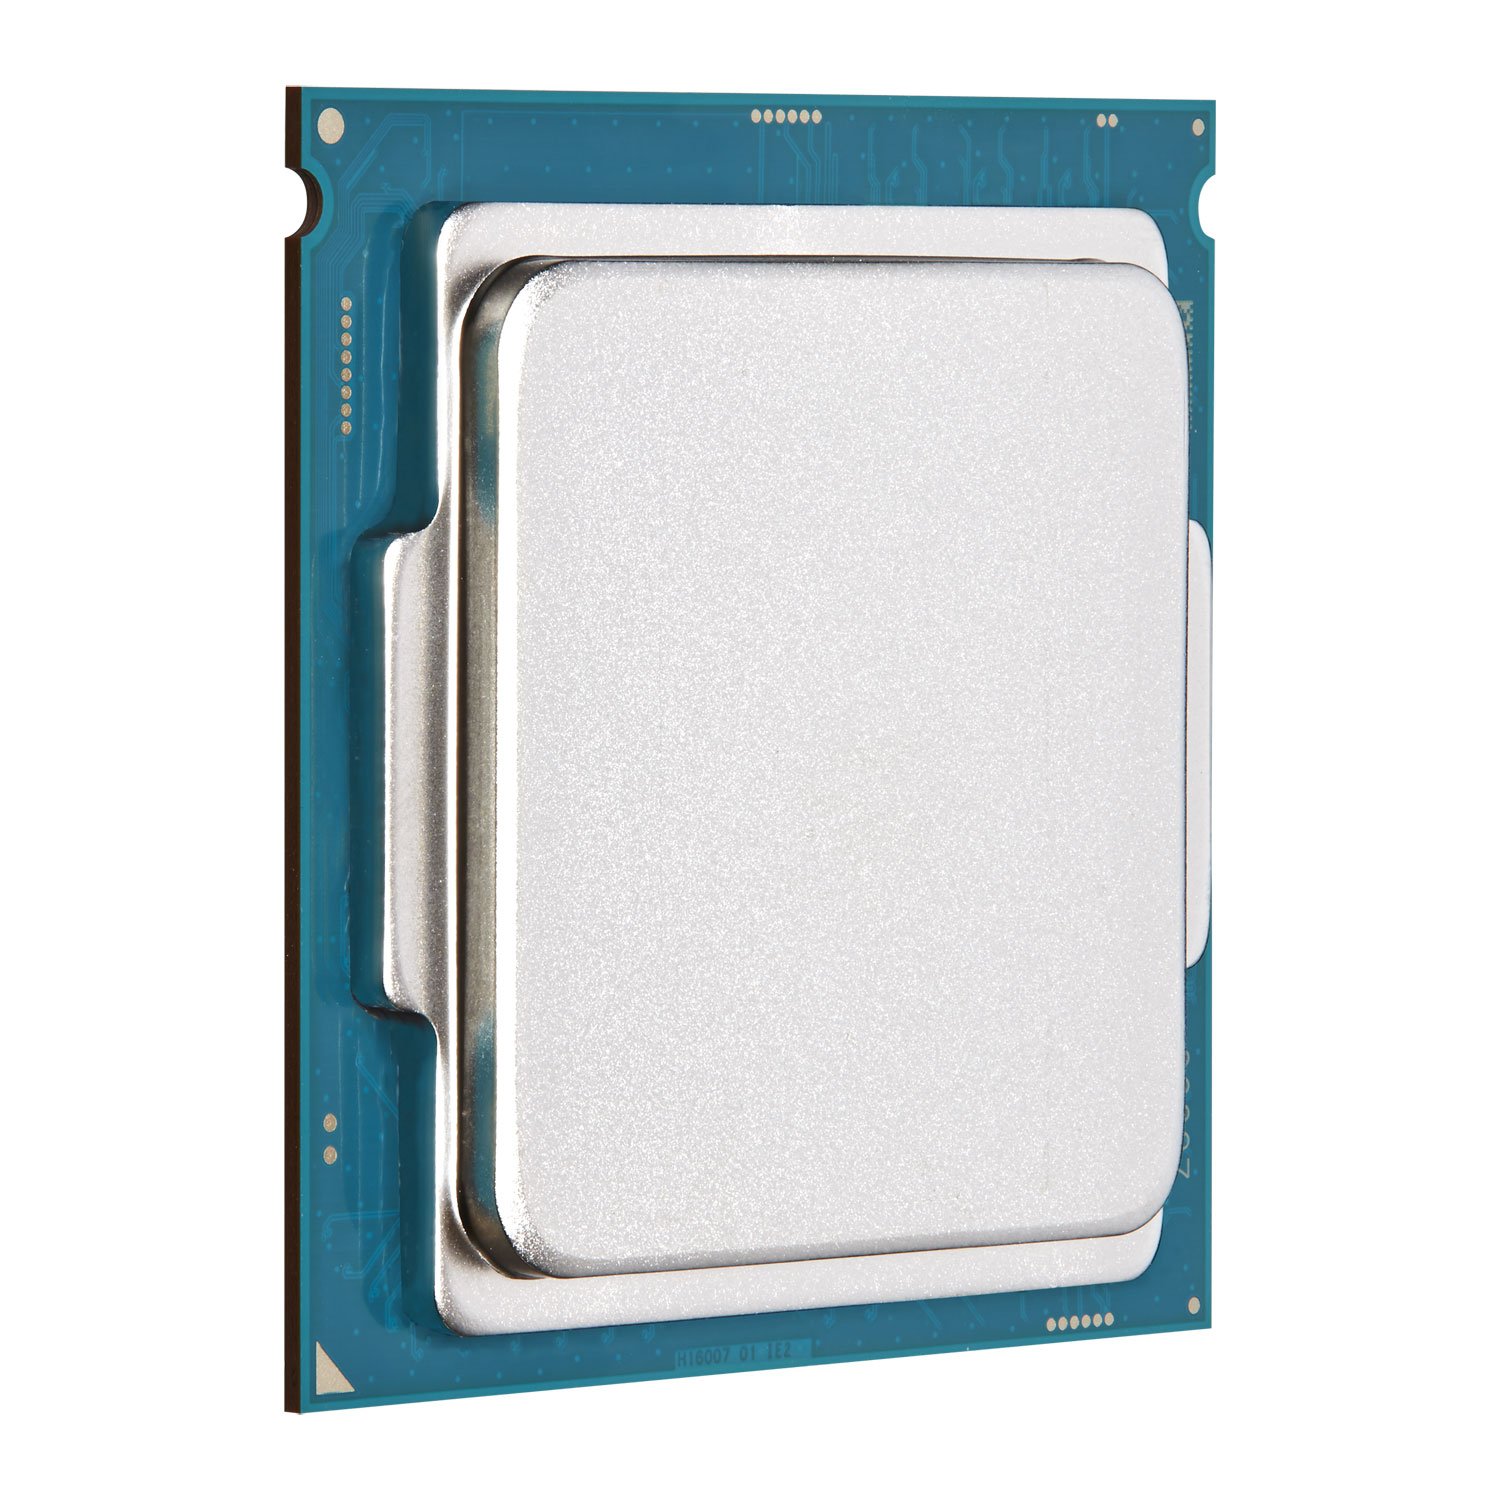 Intel 3.70 GHz Core i3-6100 3M Cache Processor (BX80662I36100)